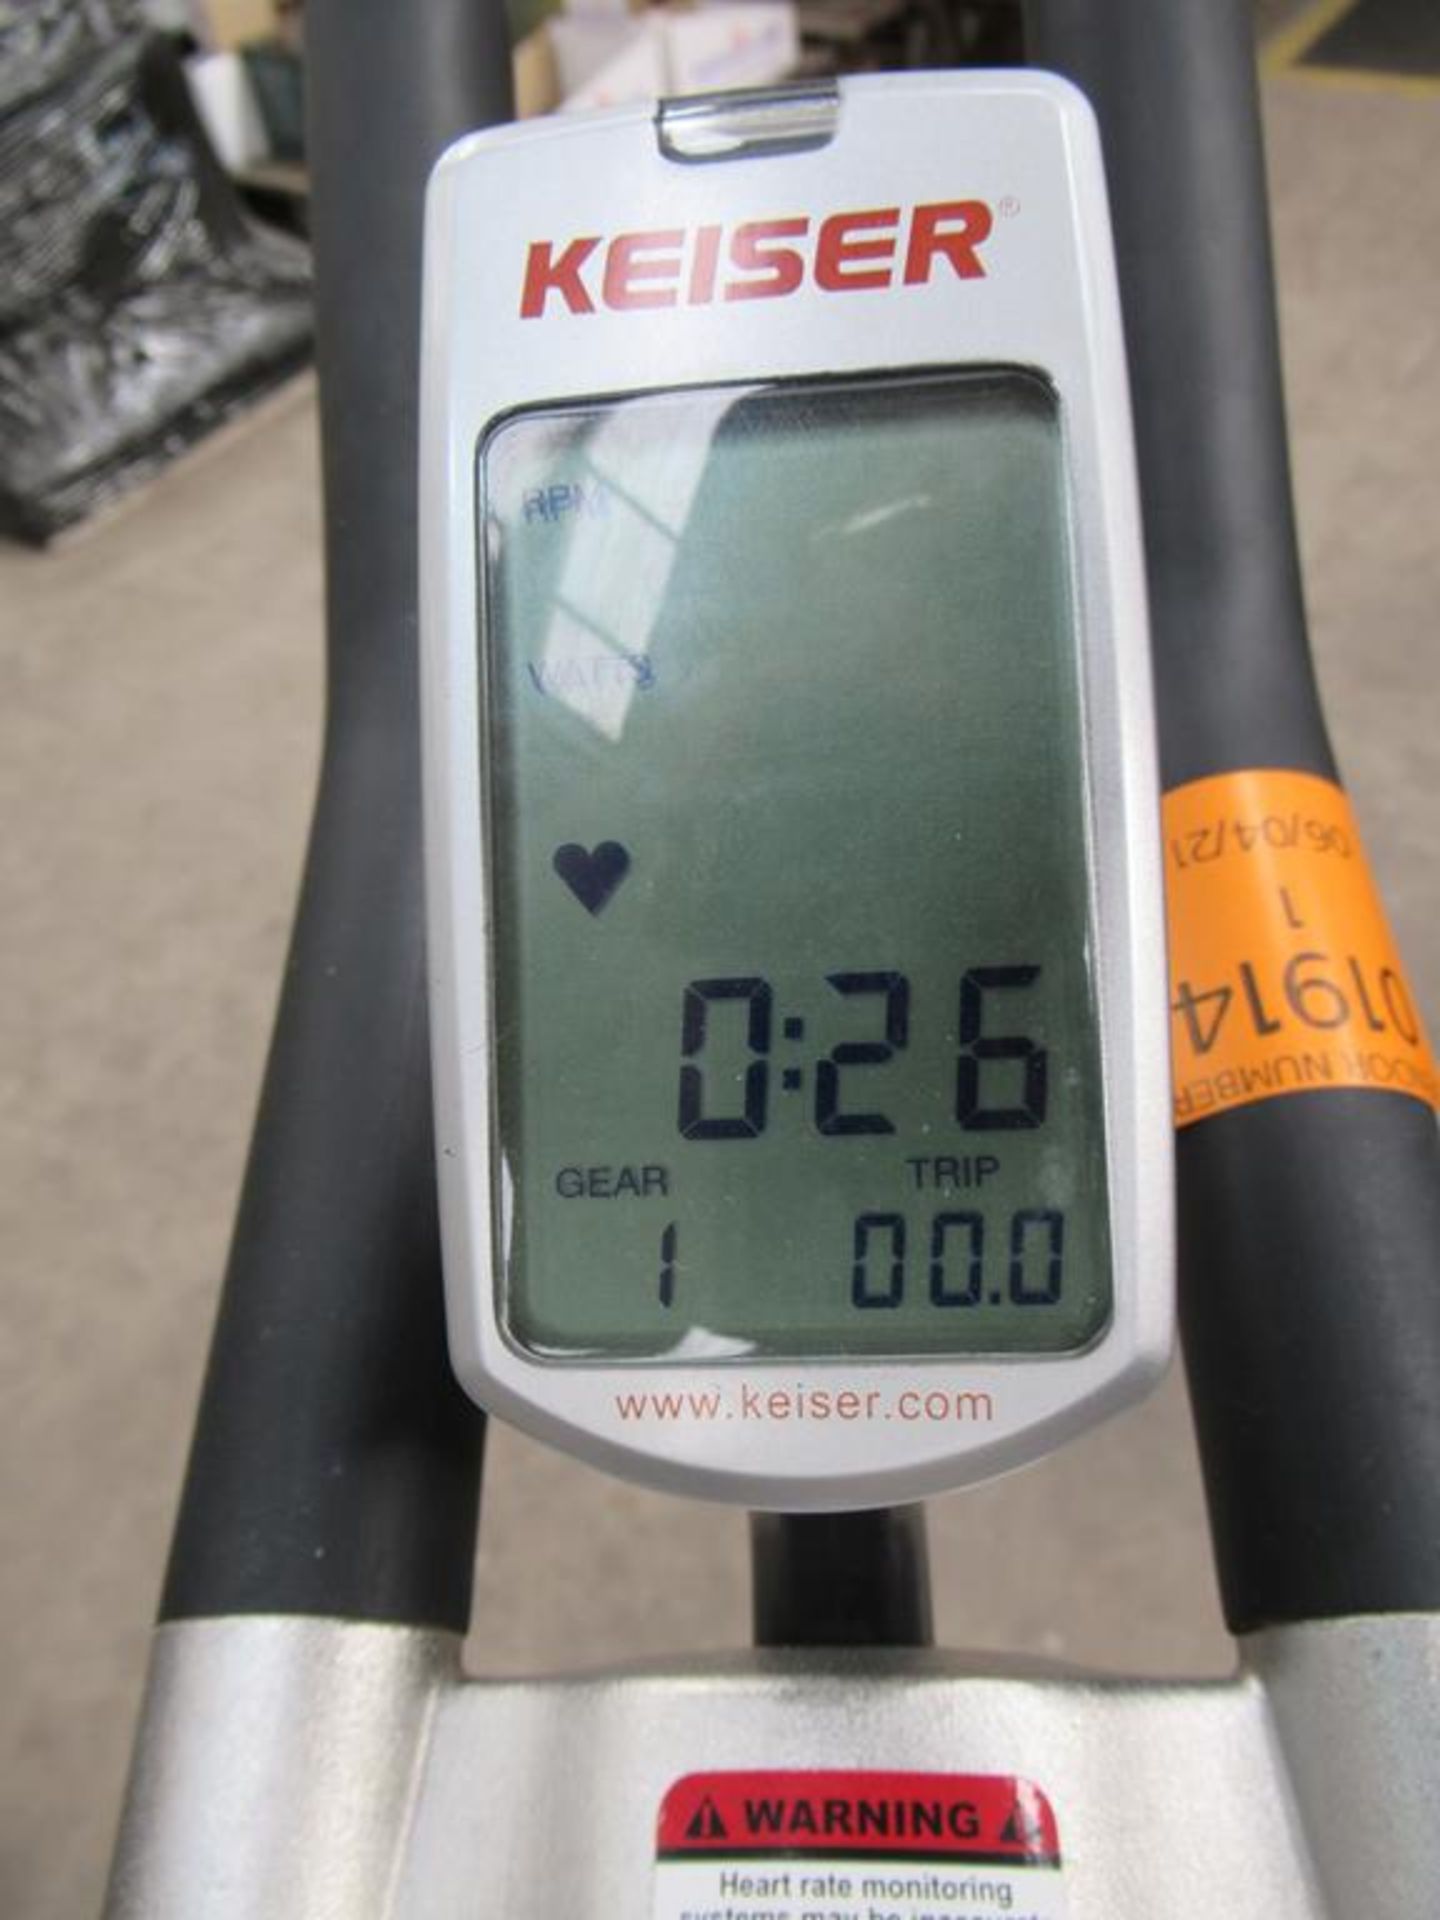 Keiser M3 Indoor Exercise Bike - Image 2 of 2